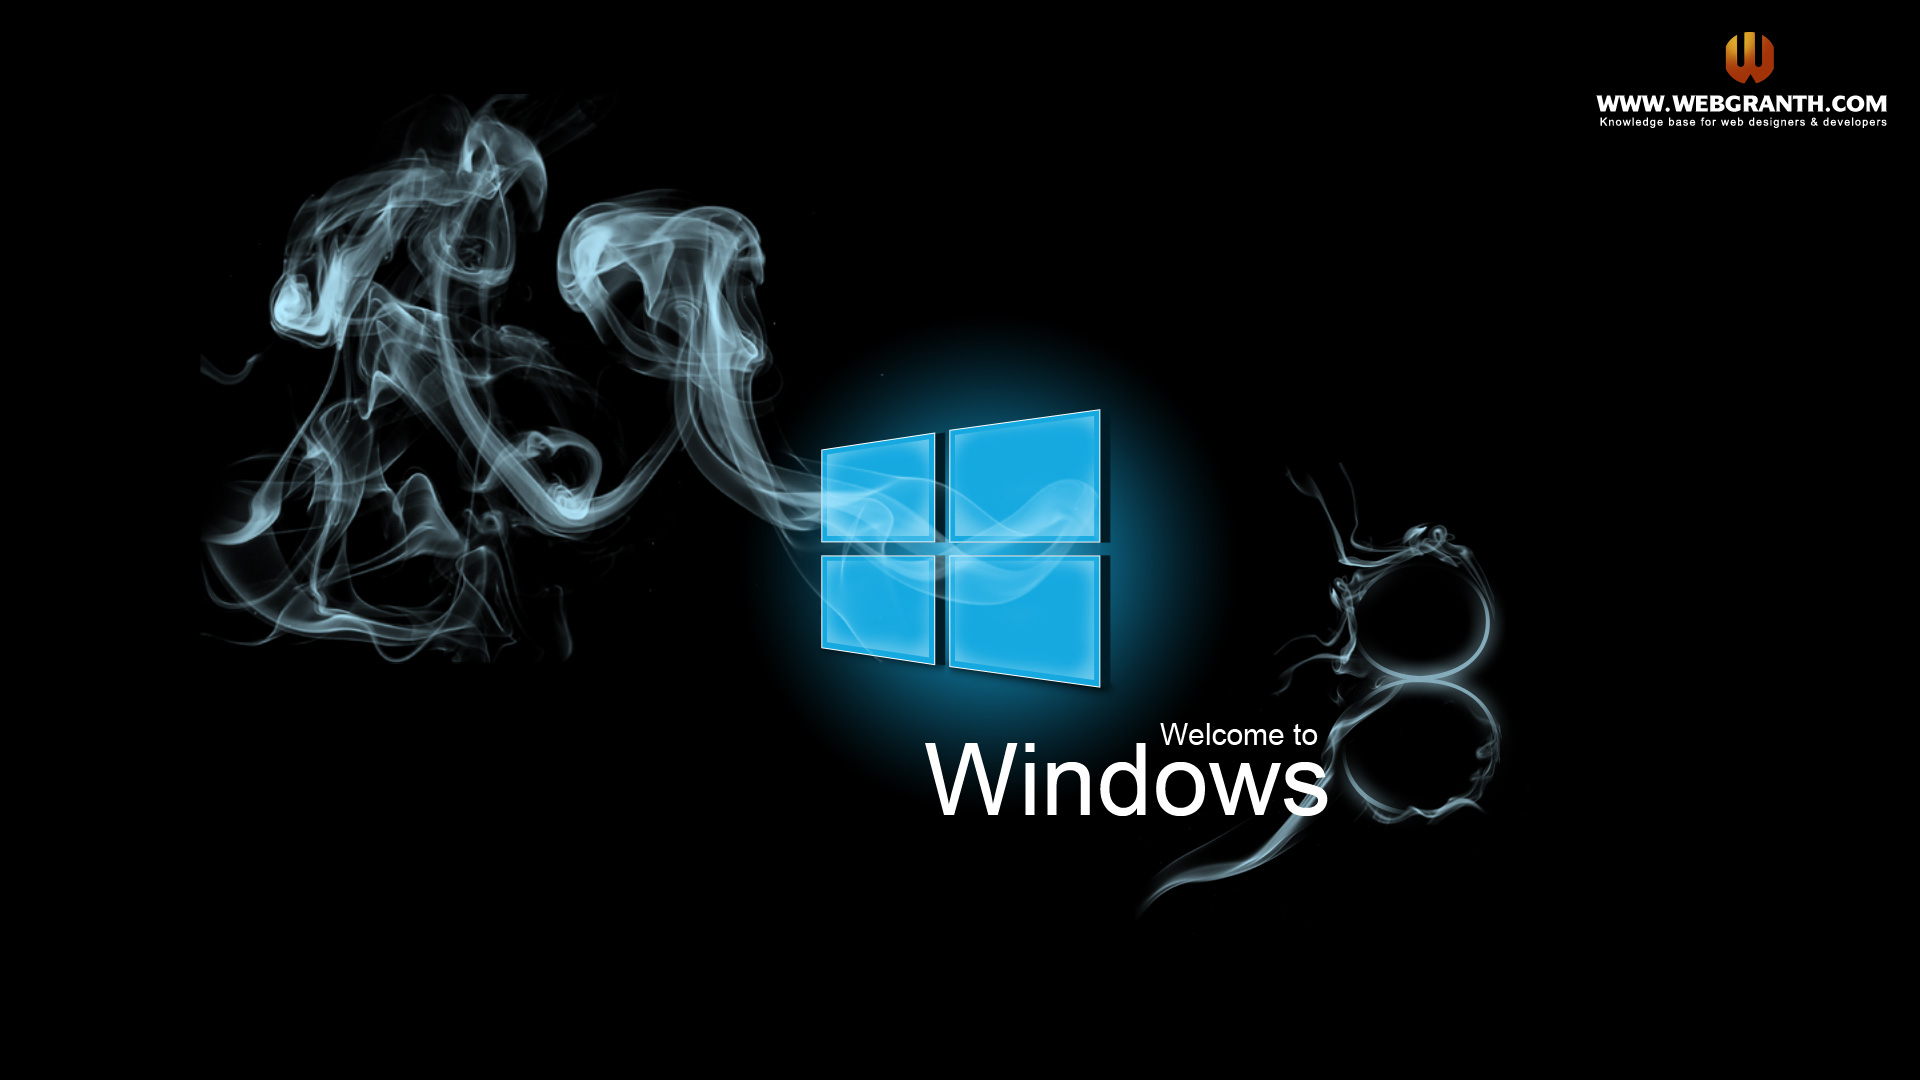 Free Windows 8 Wallpaper Backgrounds 2jpg 1920x1080